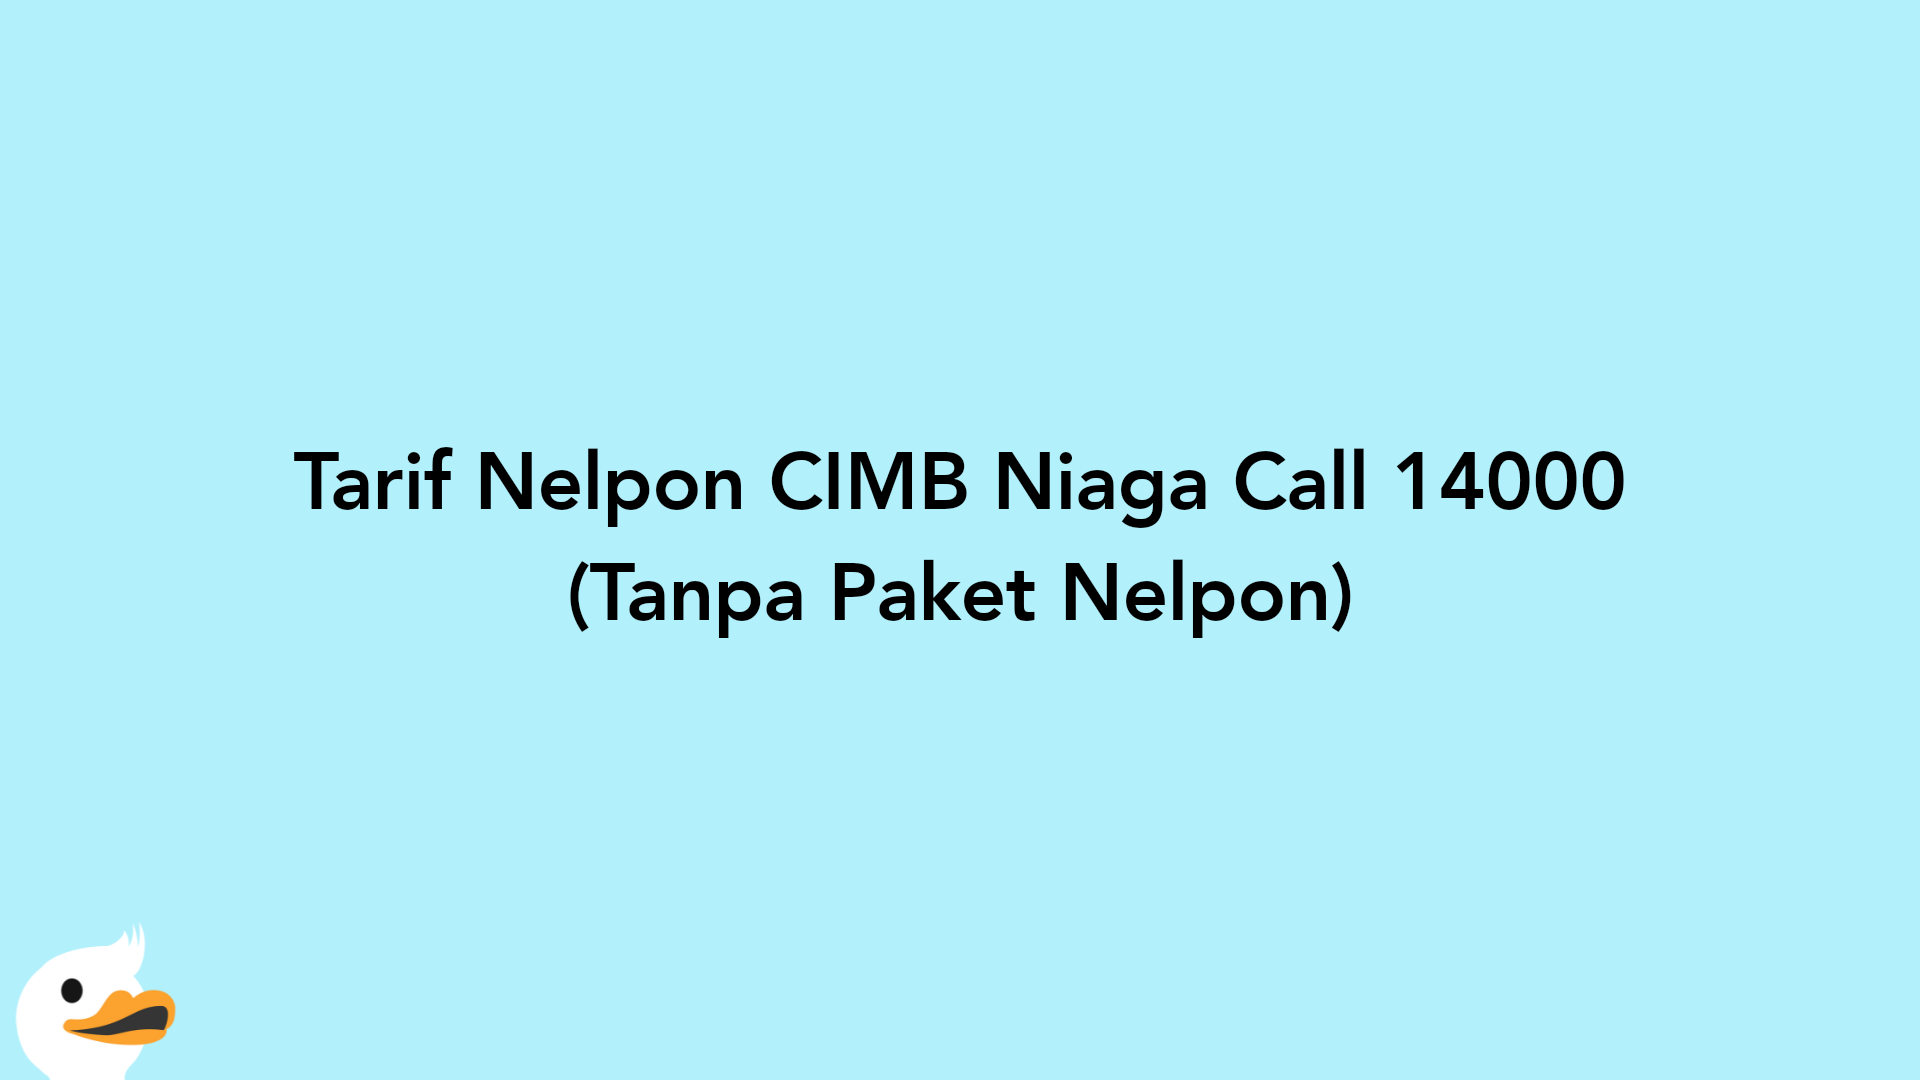 Tarif Nelpon CIMB Niaga Call 14000 (Tanpa Paket Nelpon)